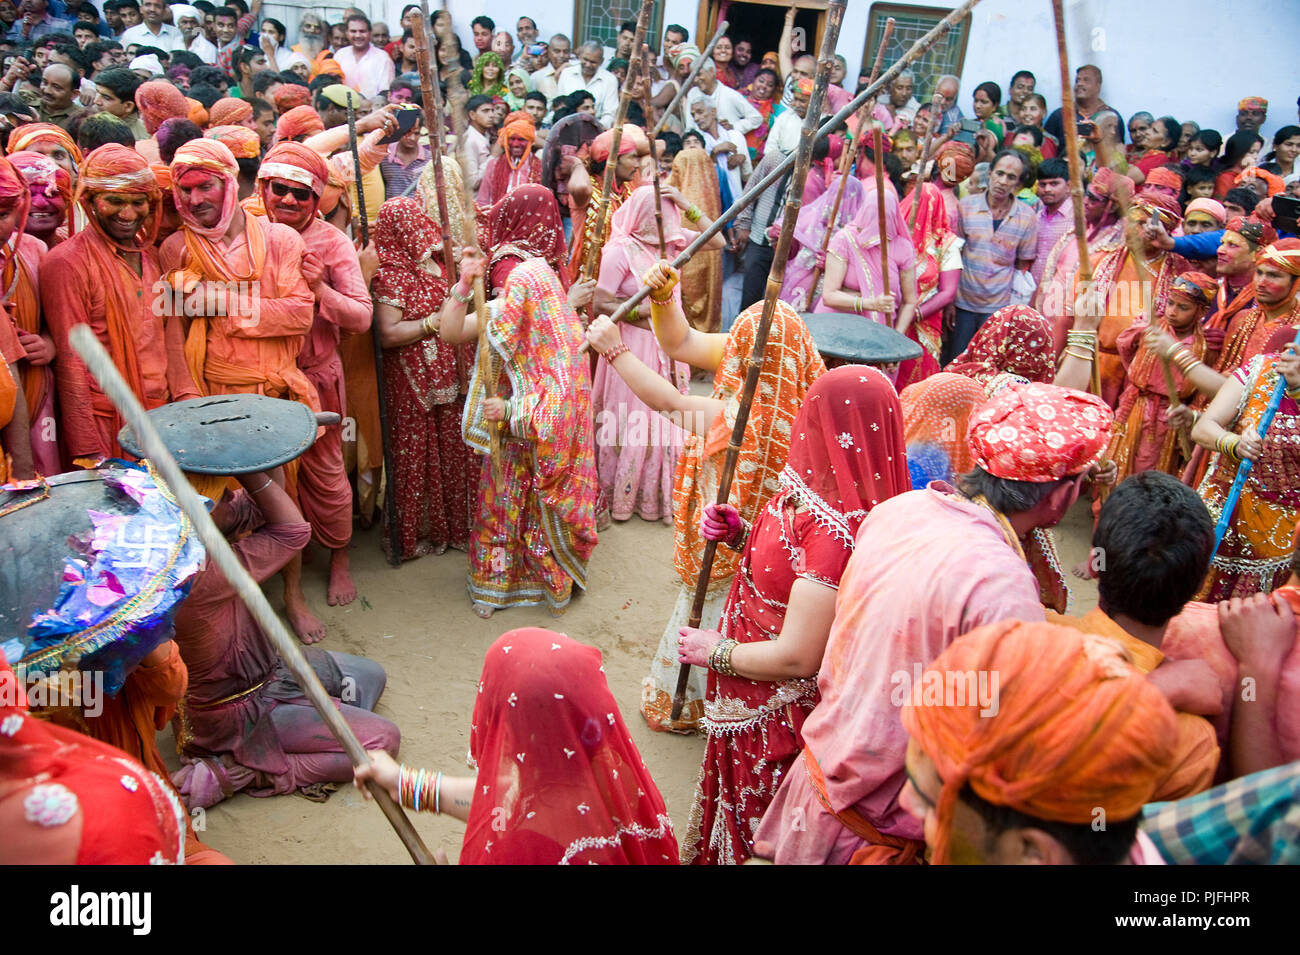 Anhänger Sie clelebrate nandgaon Lathmar Holi Festival im Dorf Mathura Uttar Pradesh Indien Asien, Südostasien Stockfoto